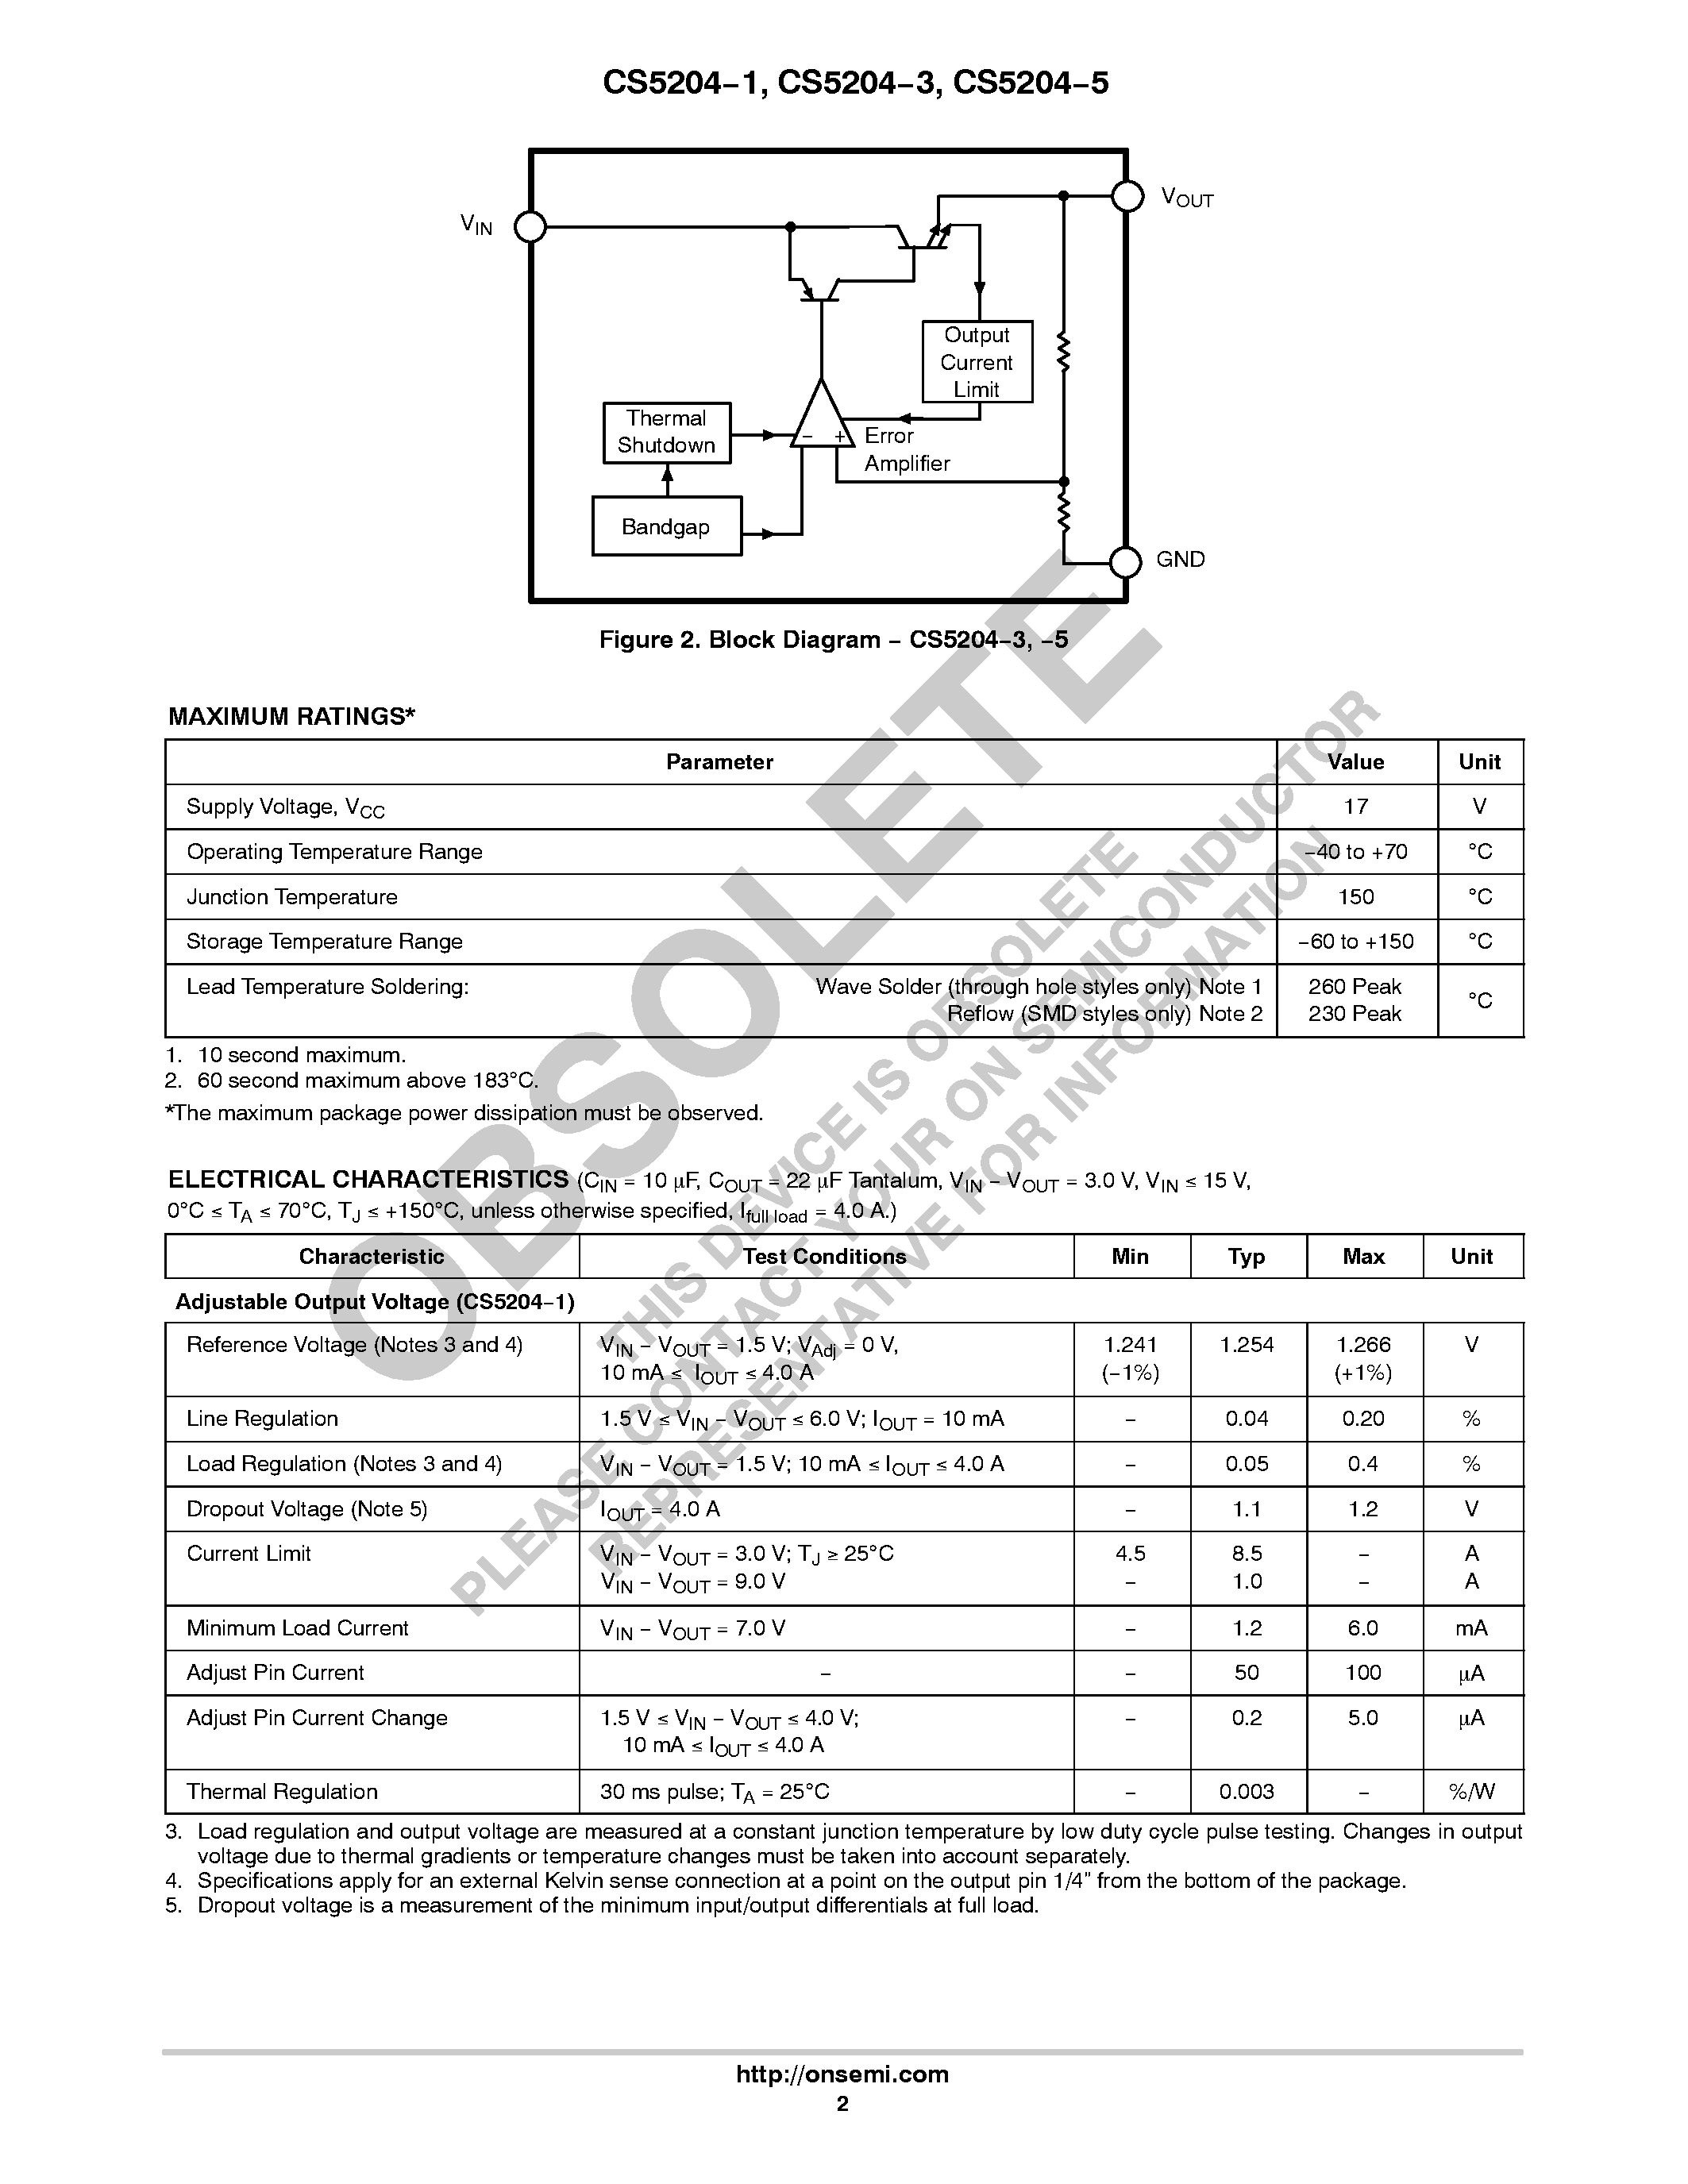 Datasheet CS5204-1 - (CS5204-1/-3/-5) Linear Regulators page 2